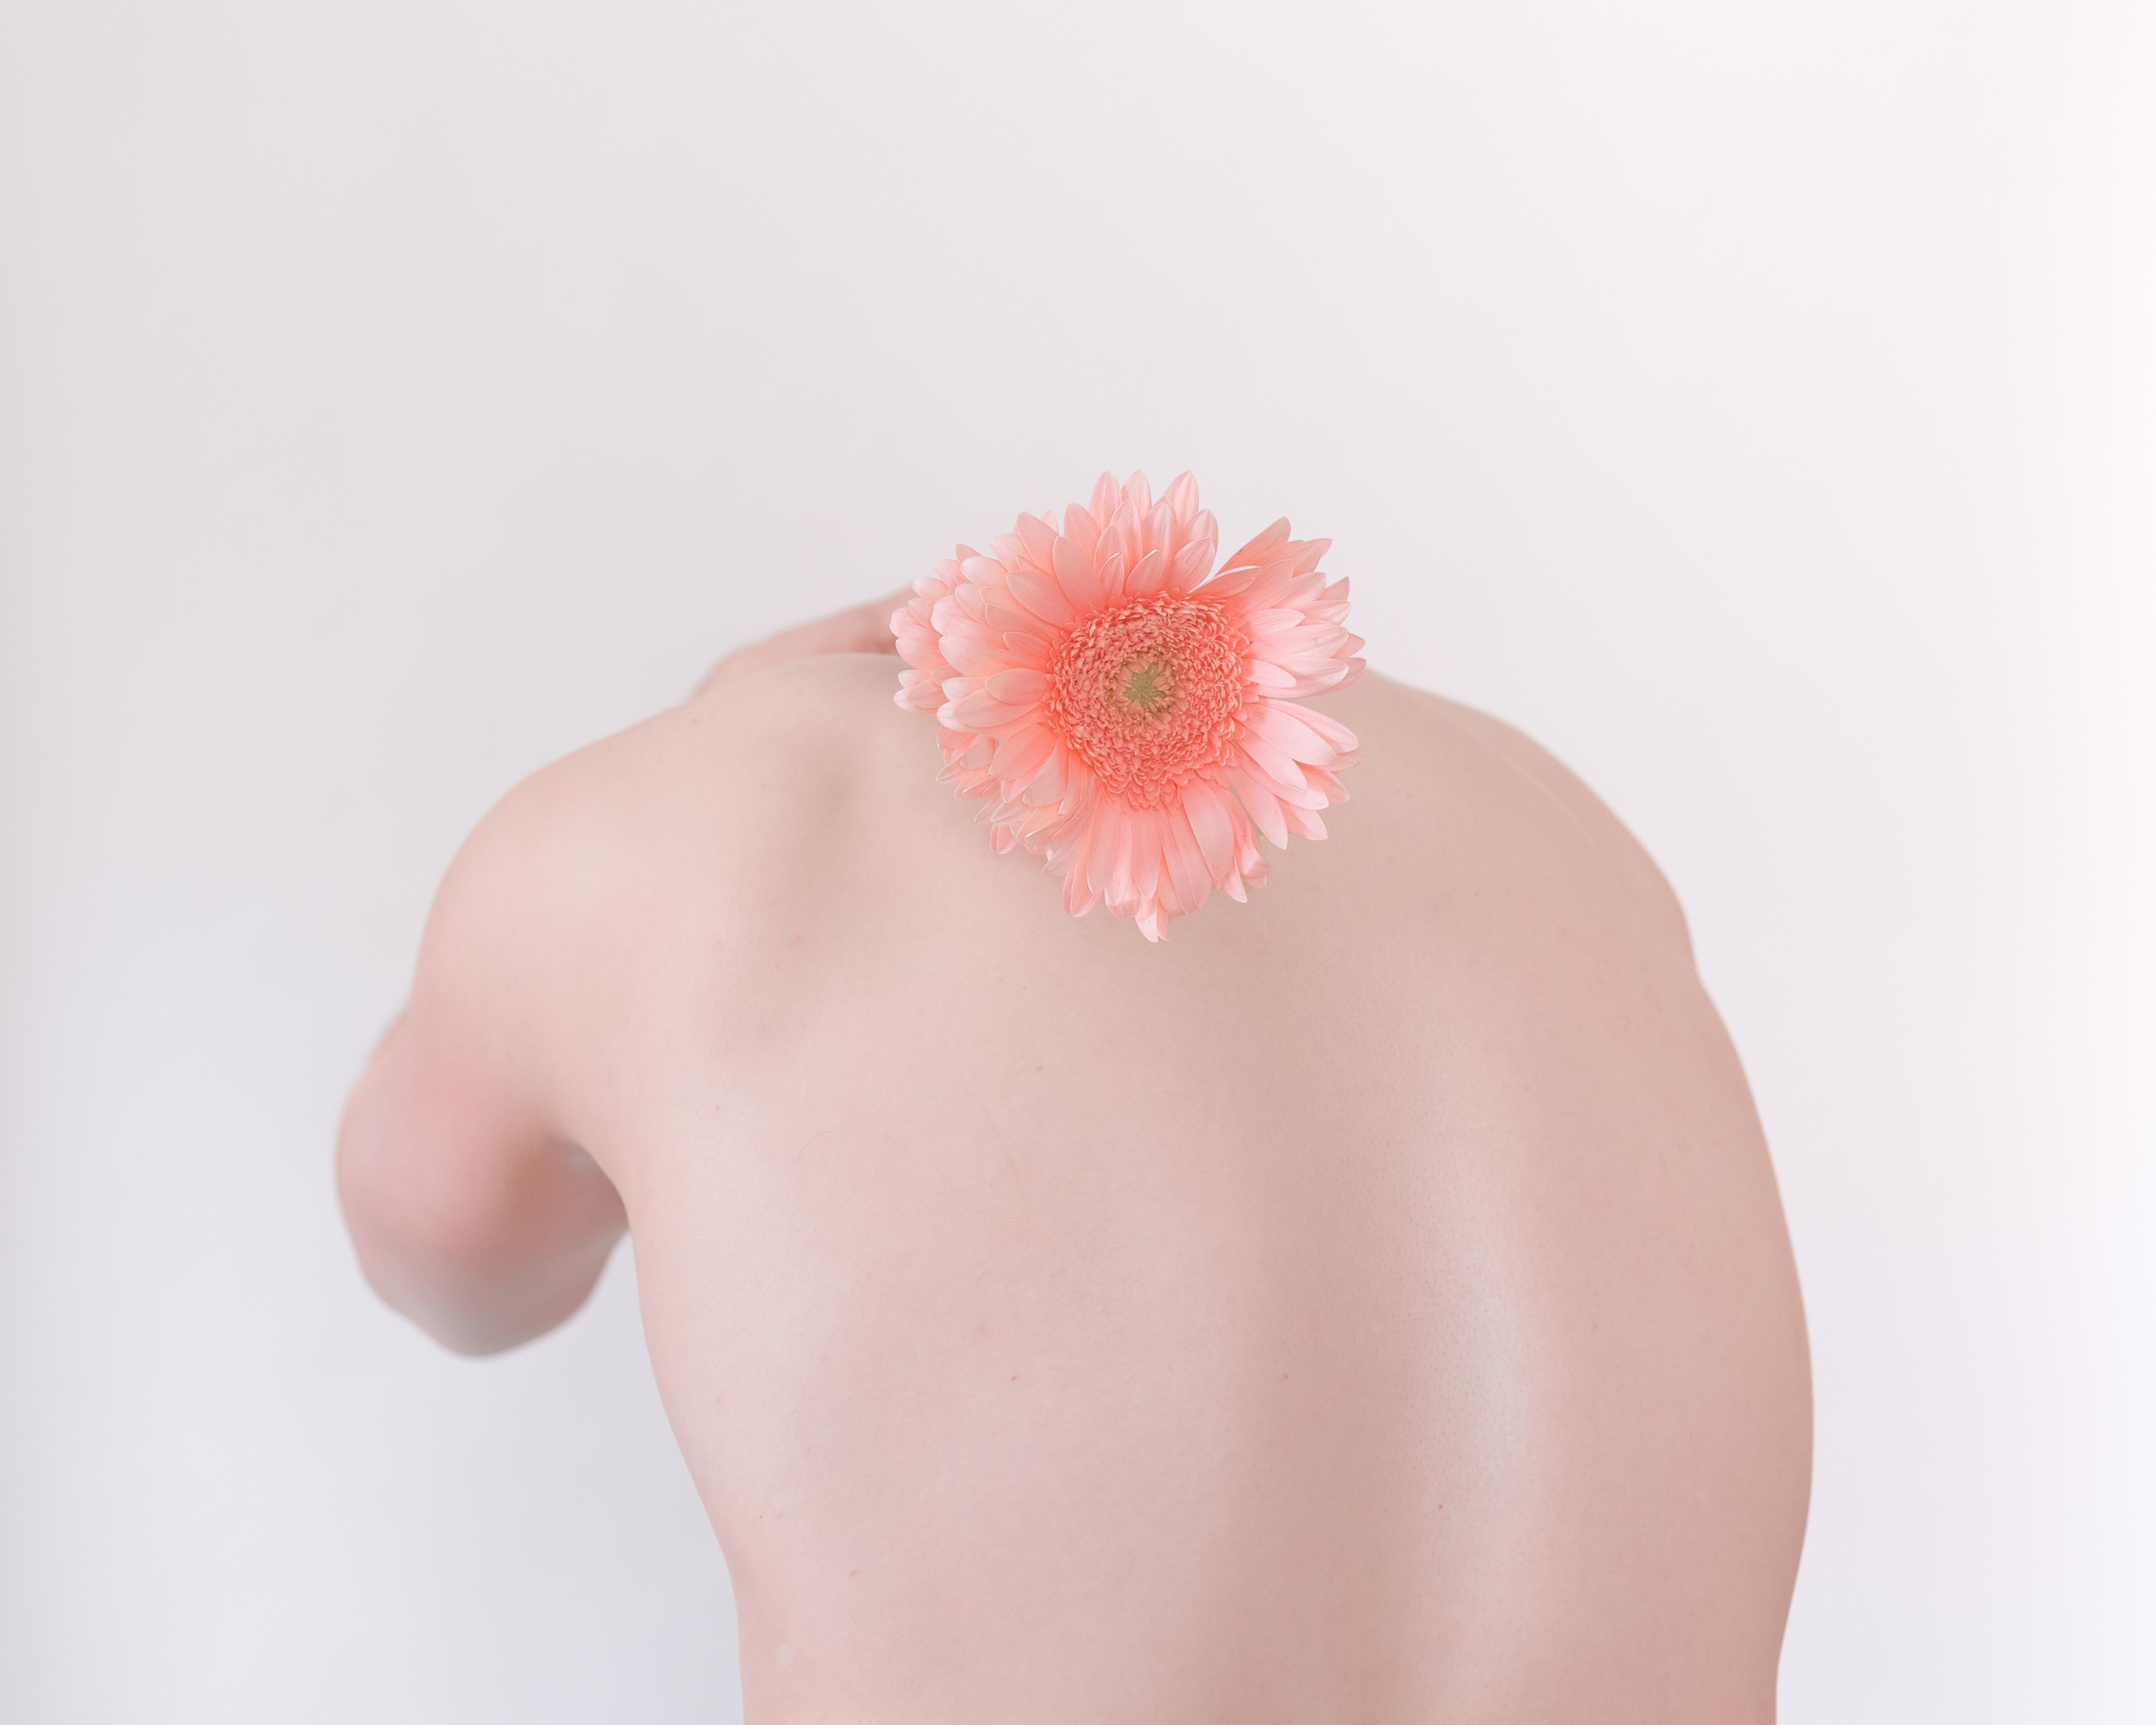 David Pugh Portrait Photograph – Skin and Flower (Male, Back, Flower, Pink, Rose, Soft, Portrait, Stillleben)